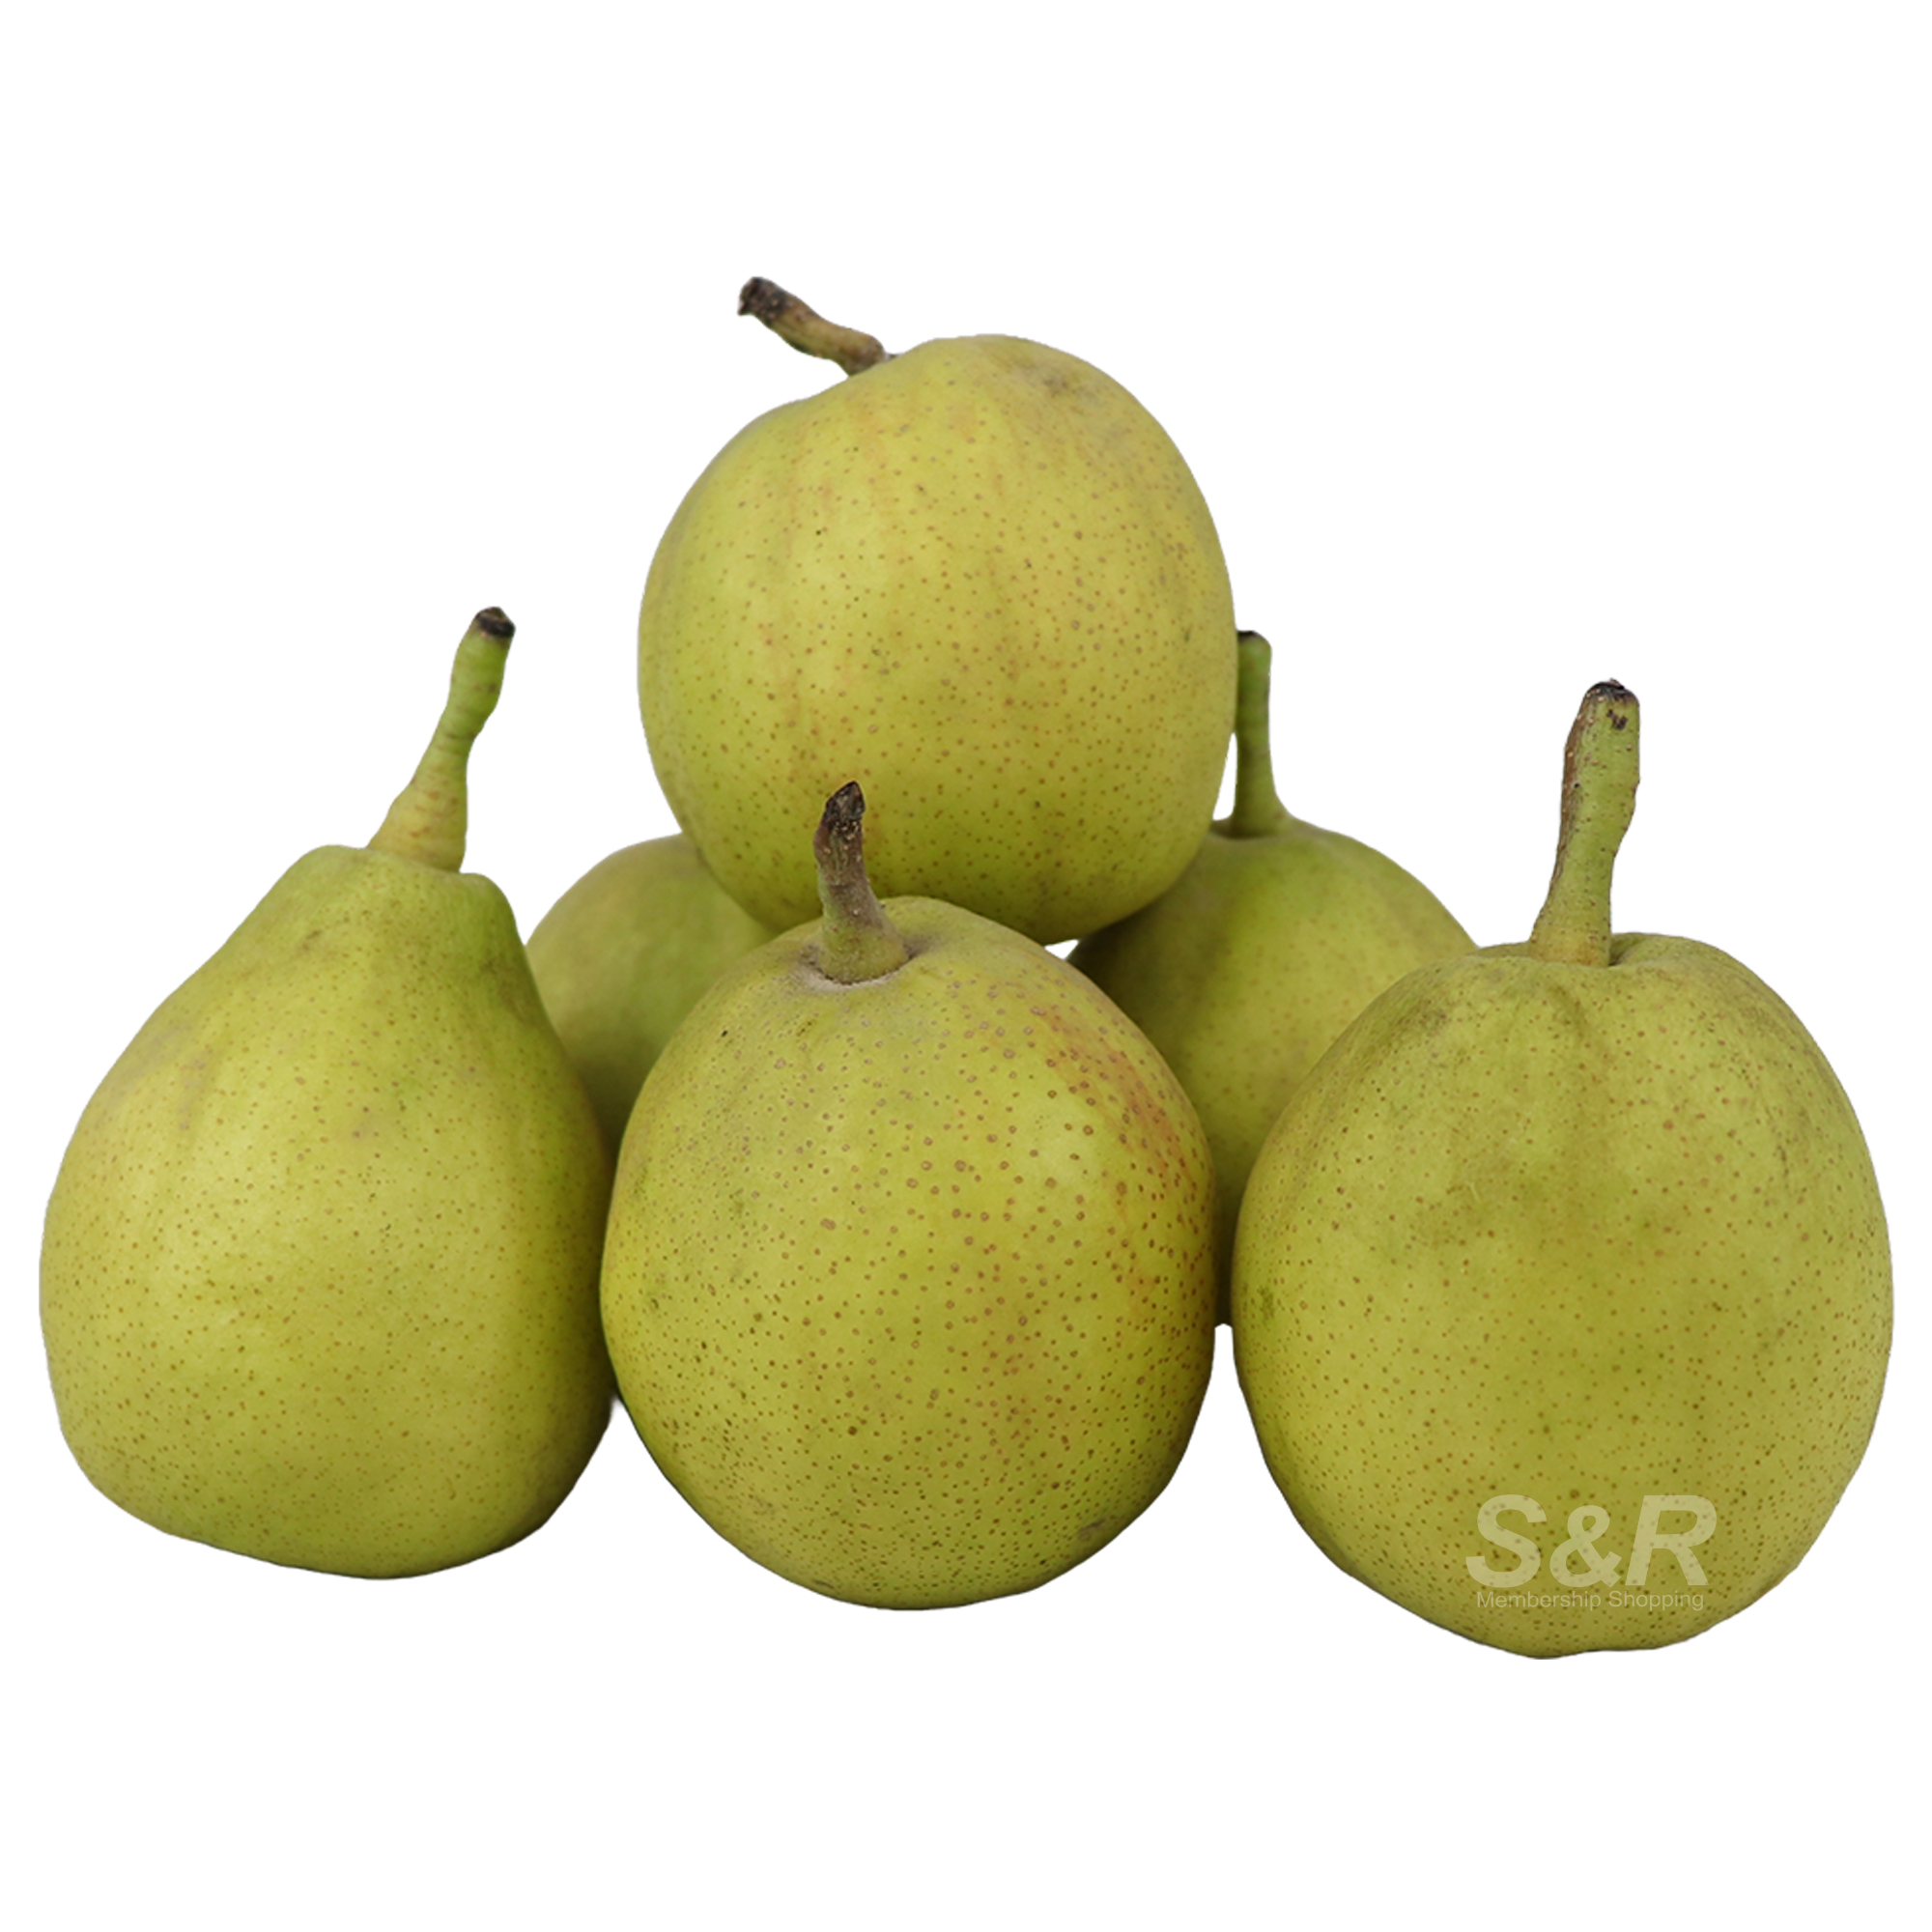 S&R Fragrant Pears 6pcs